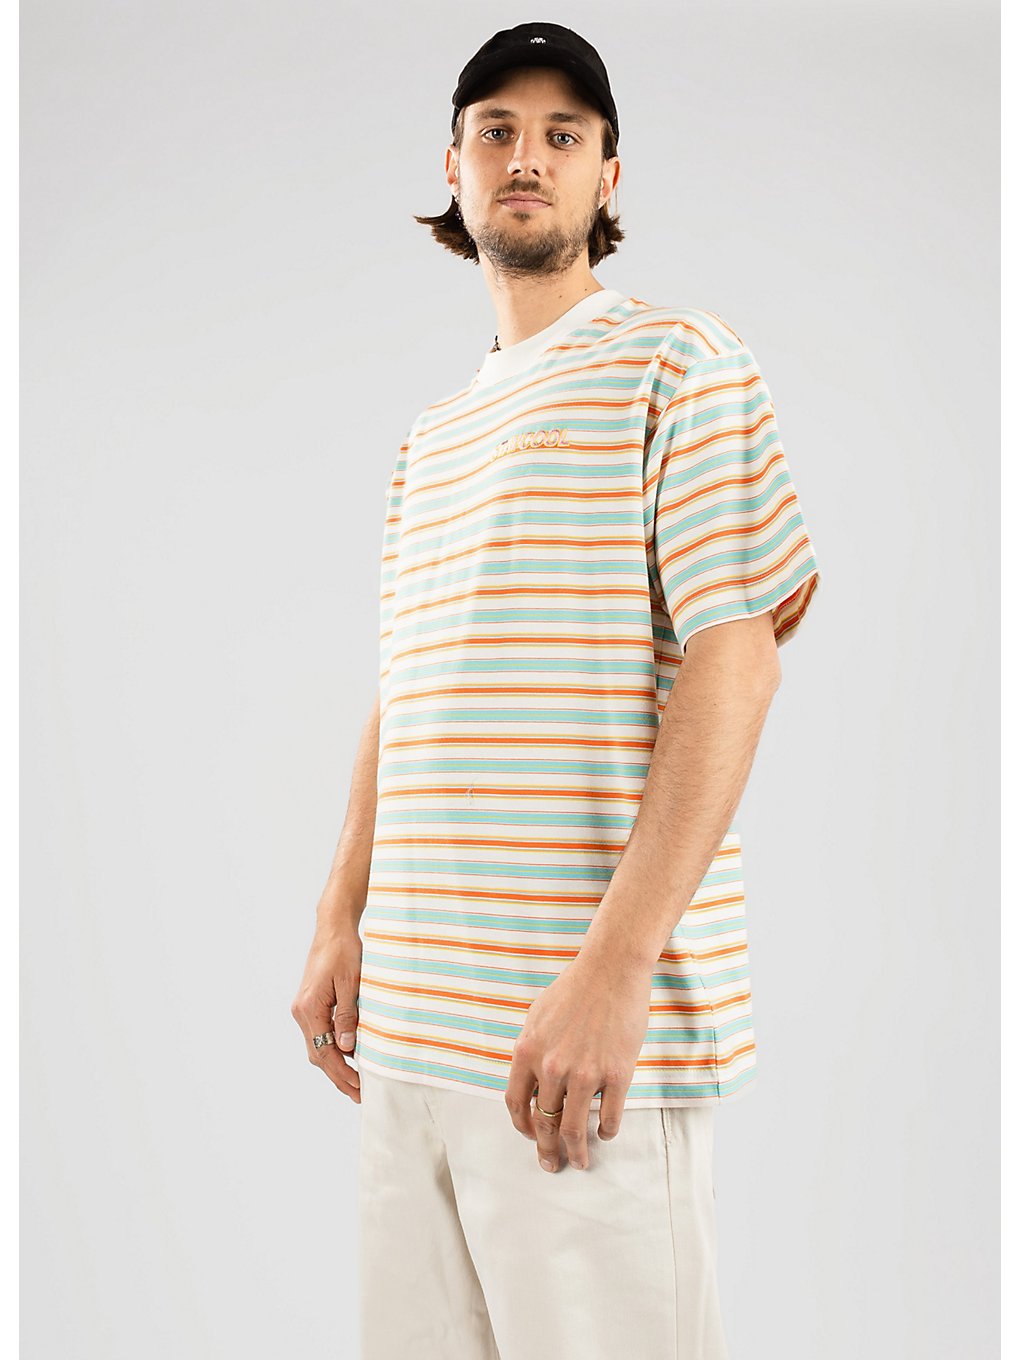 Staycoolnyc Caribbean Striped T-Shirt patroon